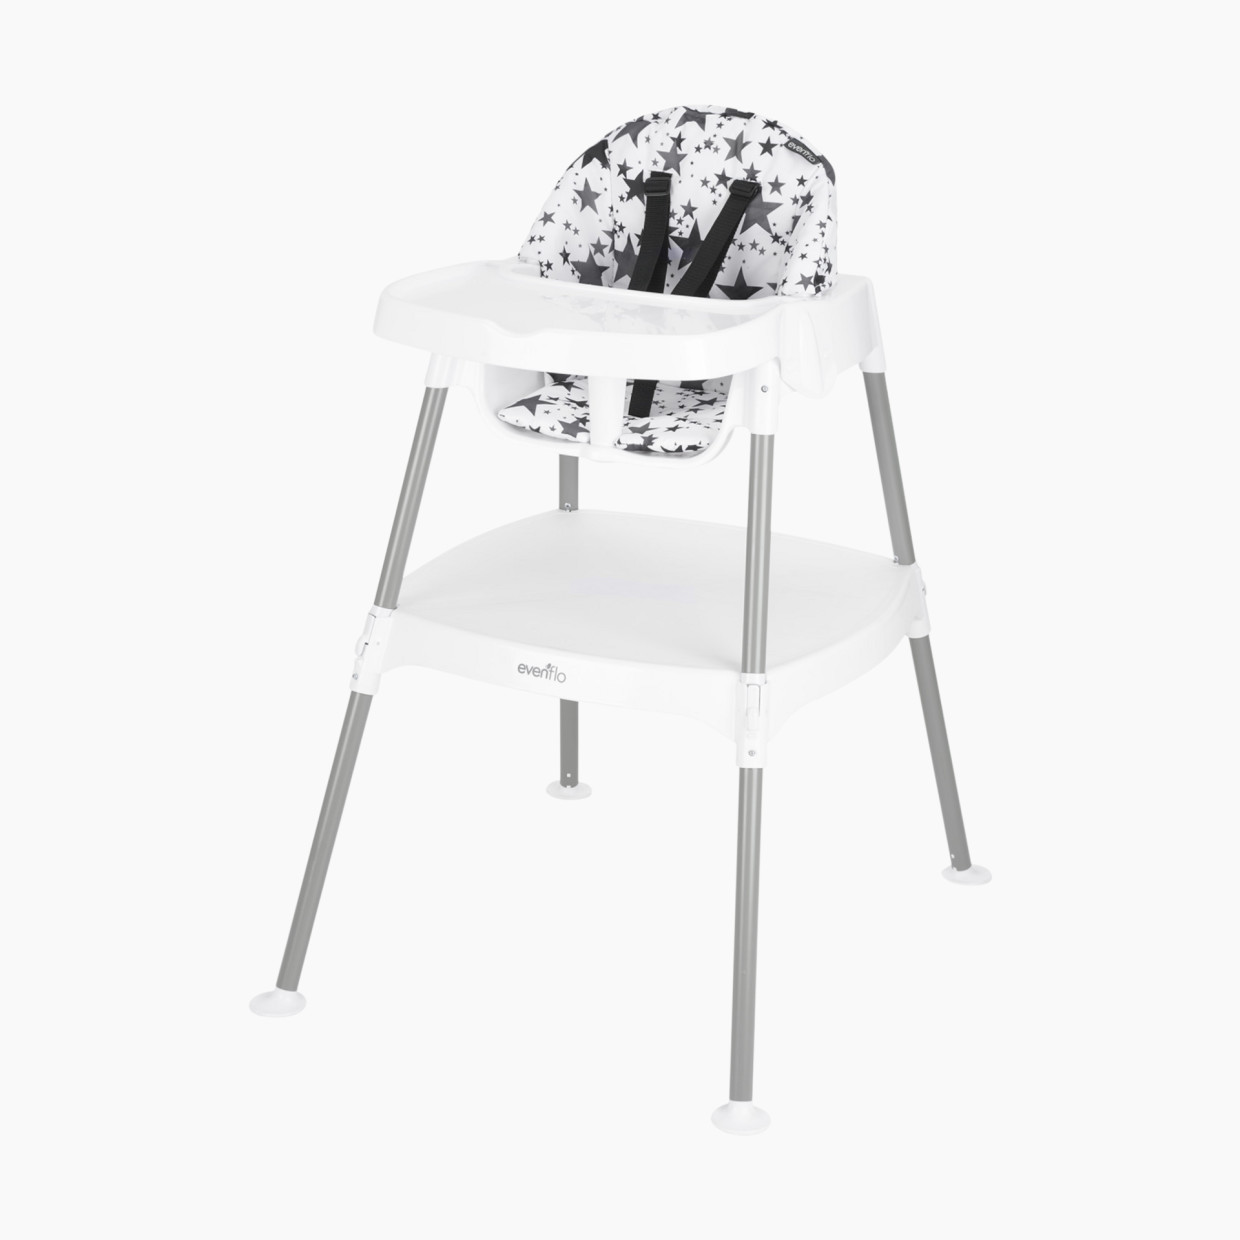 Evenflo 4-in-1 Eat & Grow Convertible High Chair - Pop Star Gray.